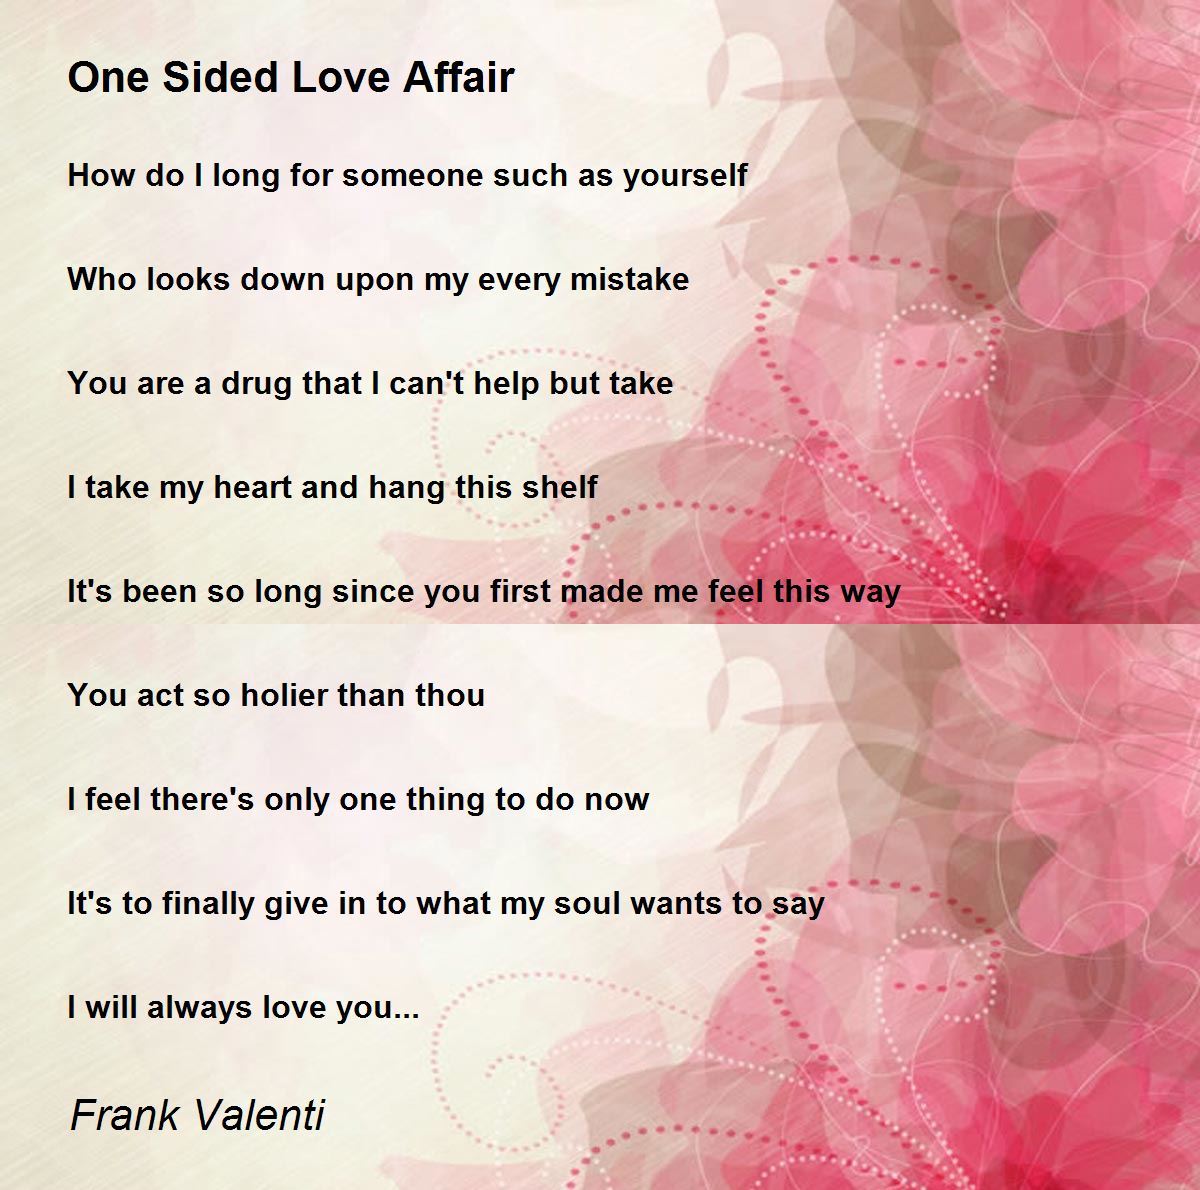 One Sided Love Affair - One Sided Love Affair Poem by Frank Valenti